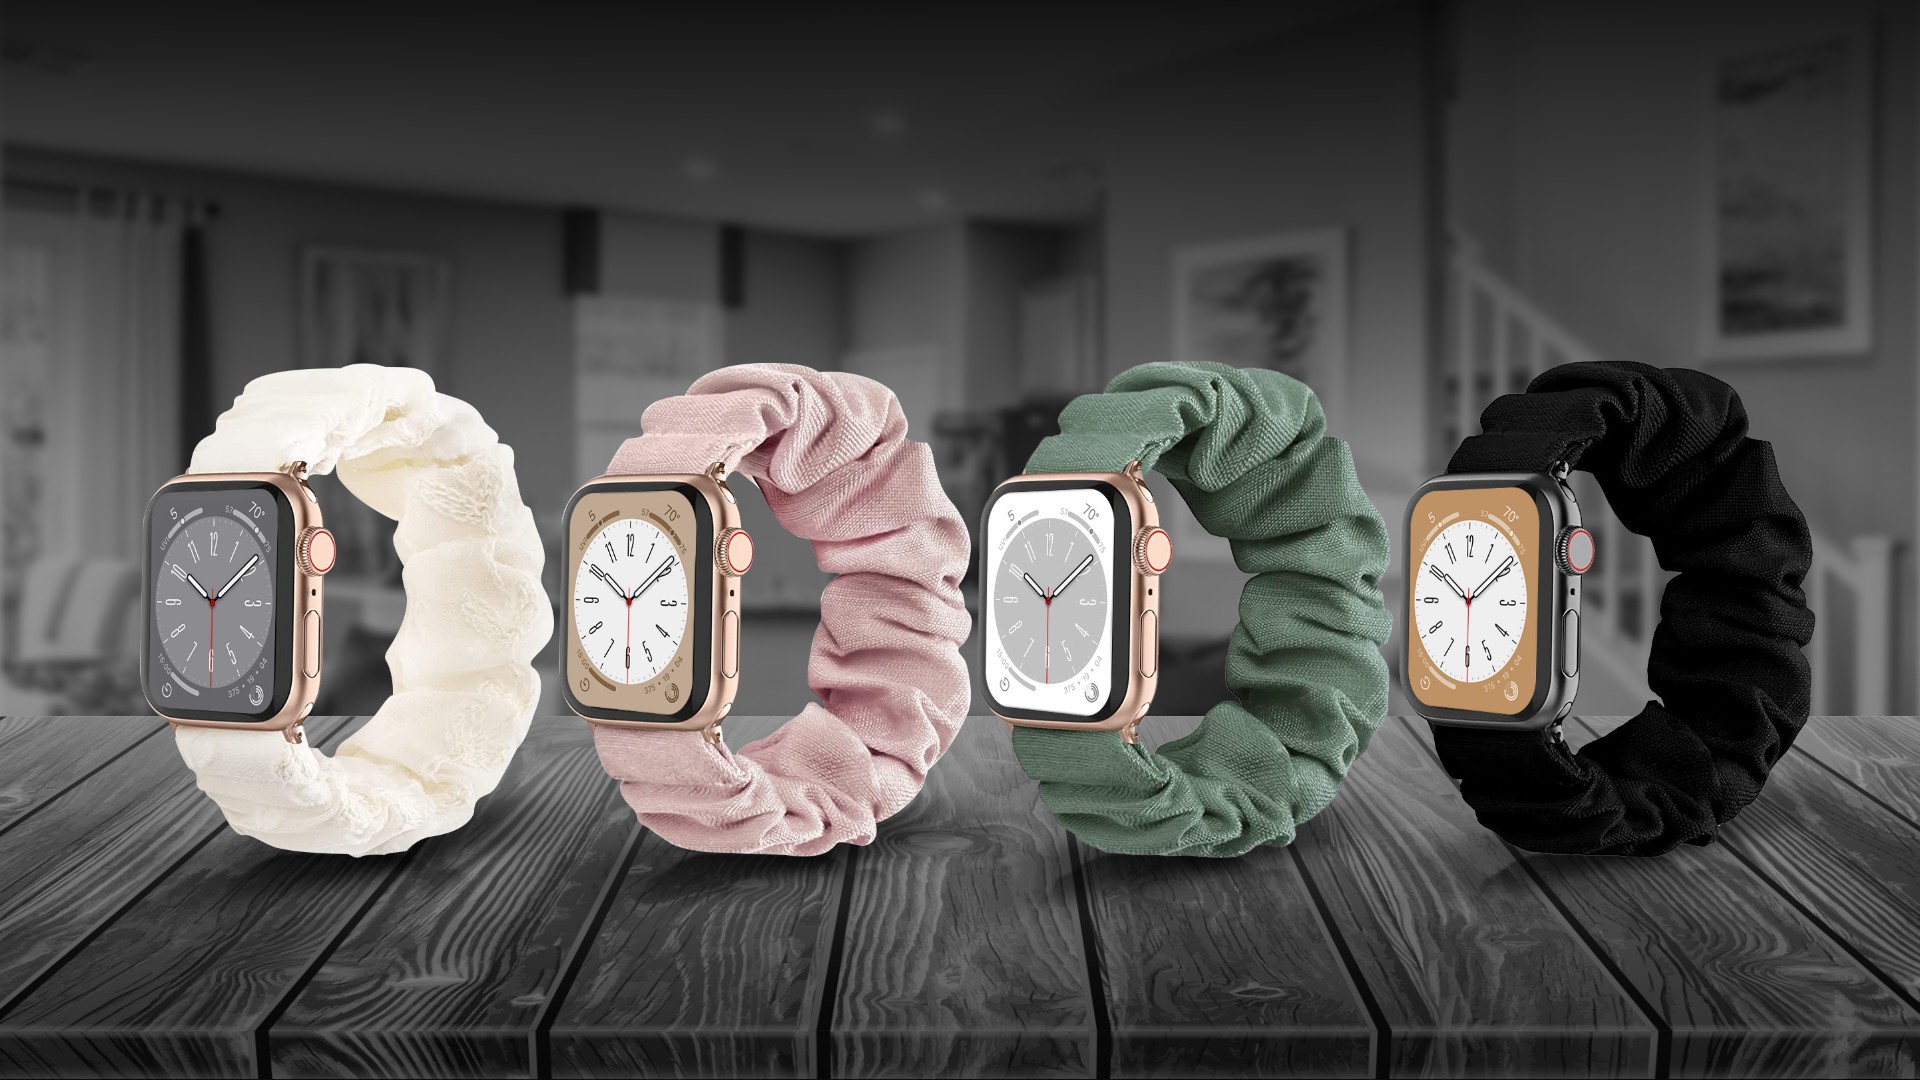 Recoppa Scrunchie Apple Watch Band